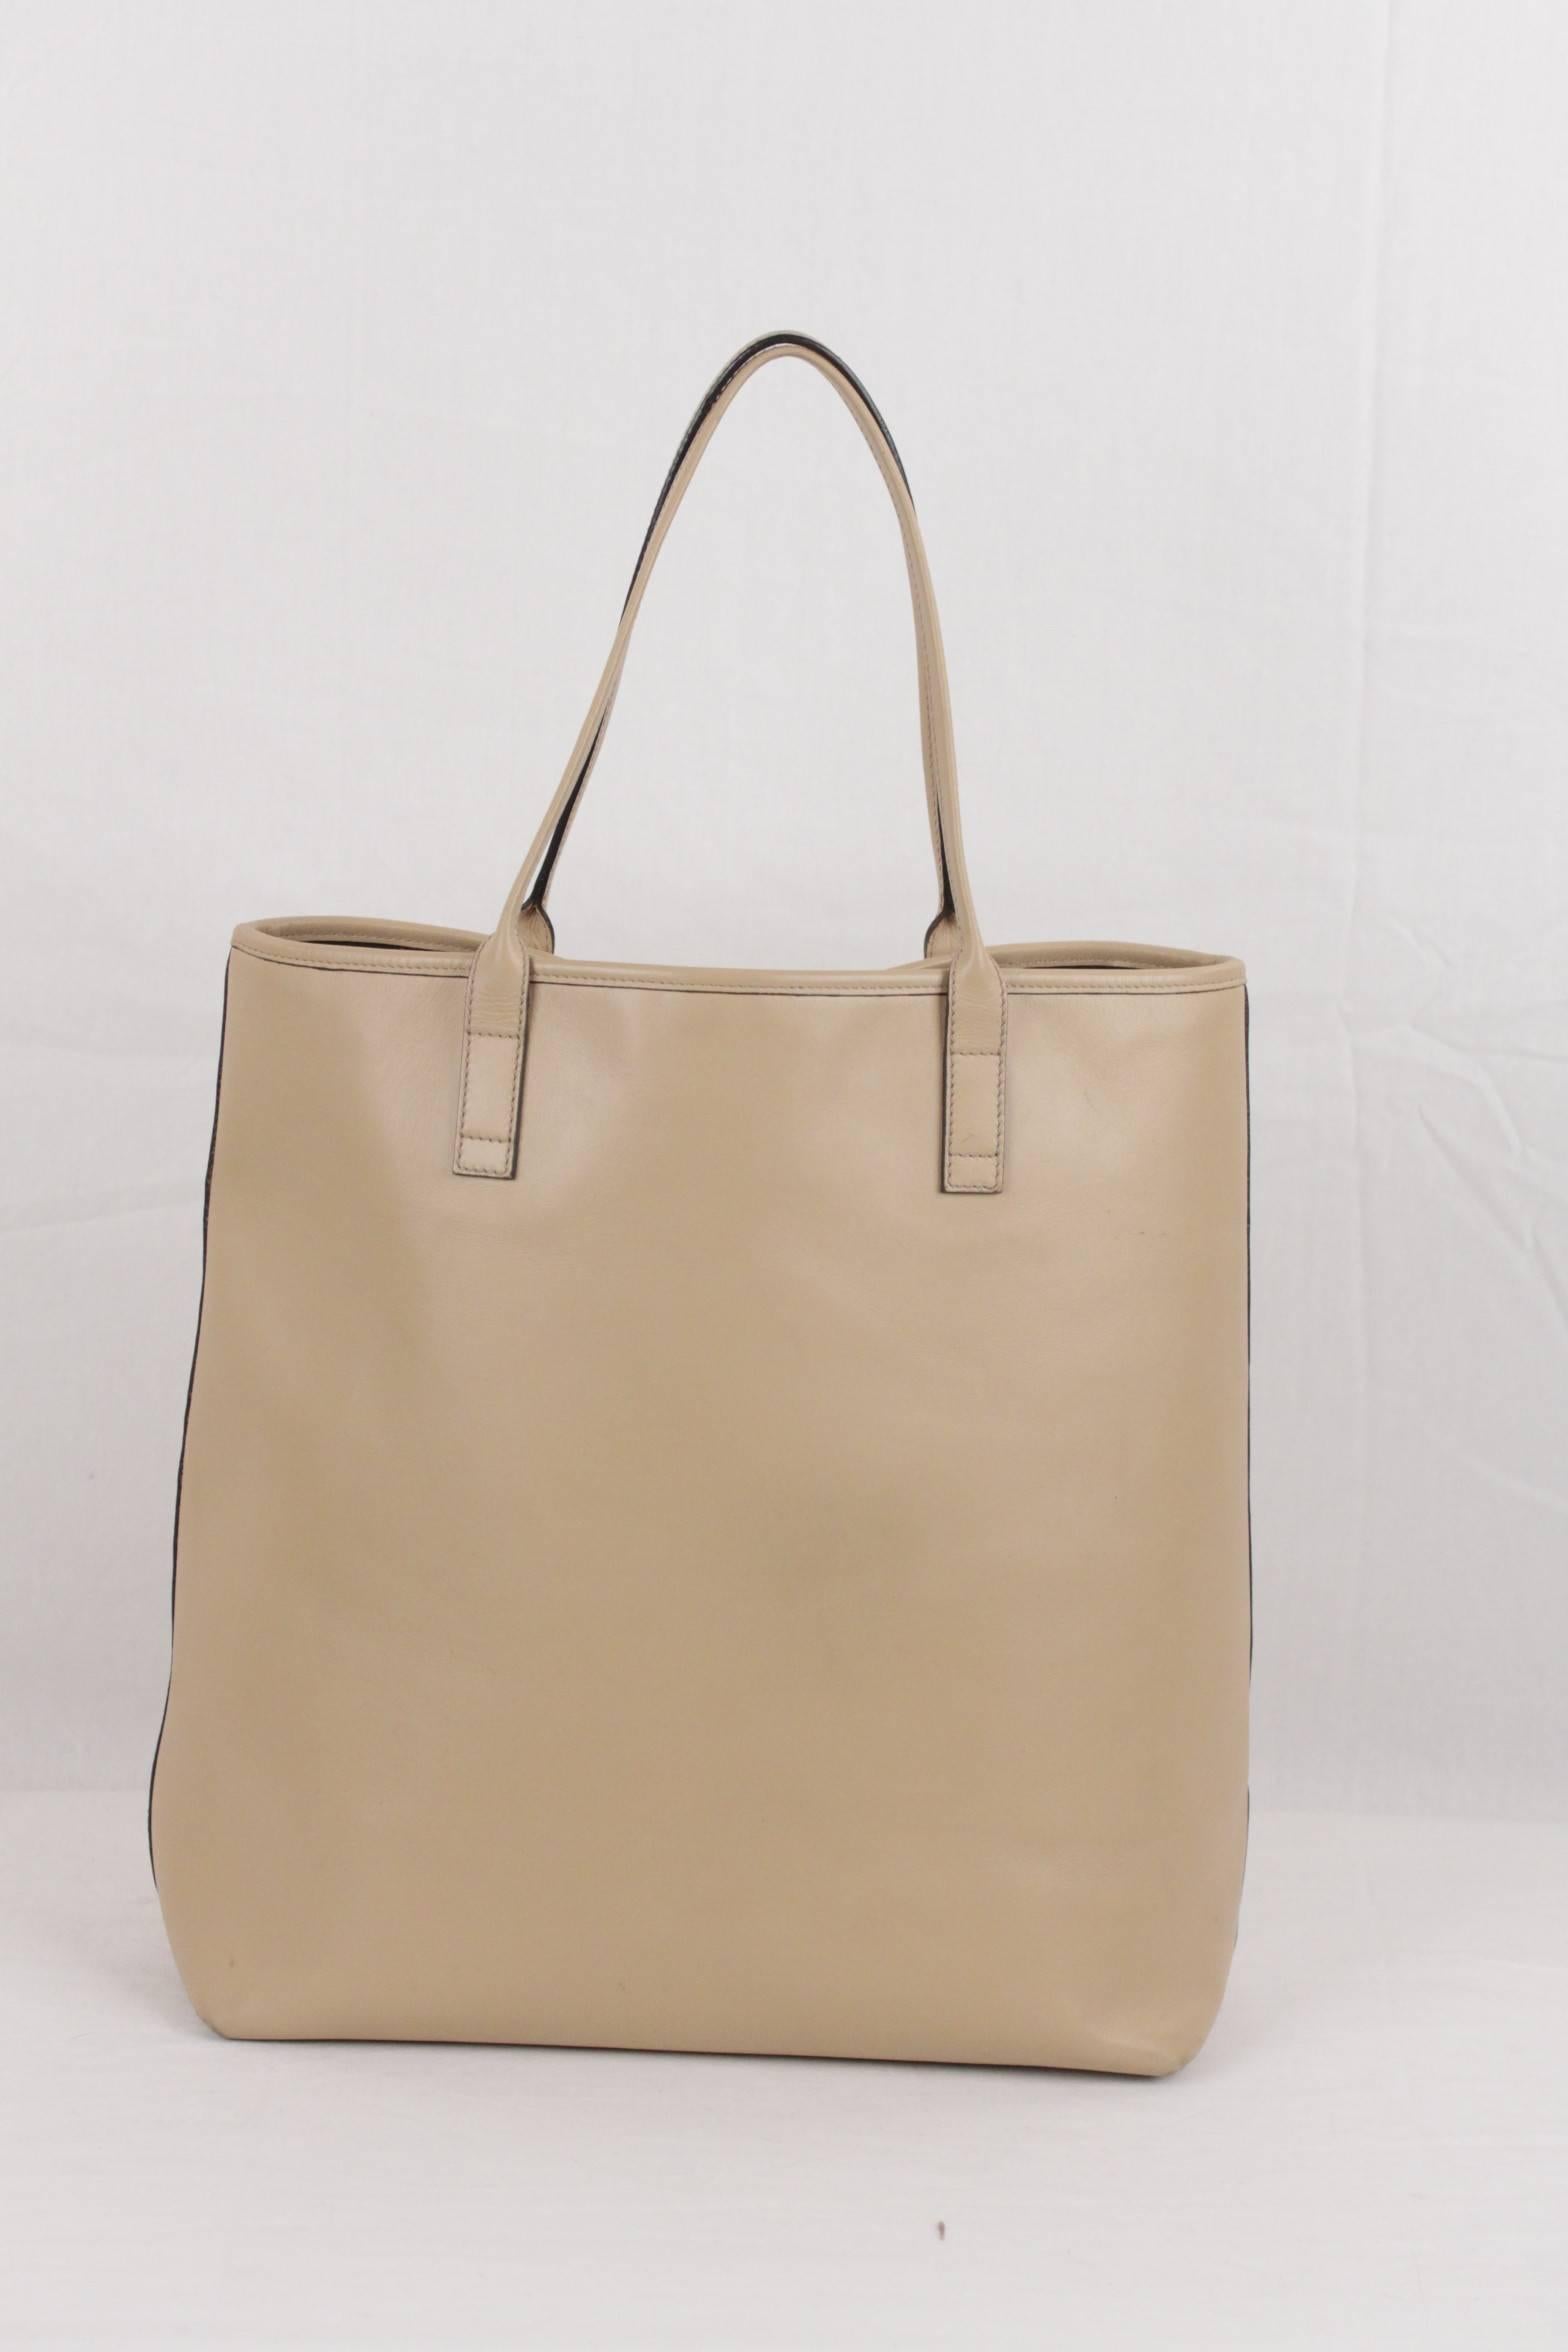 GUCCI Beige Leather SHOPPING BAG Tote Handbag 2